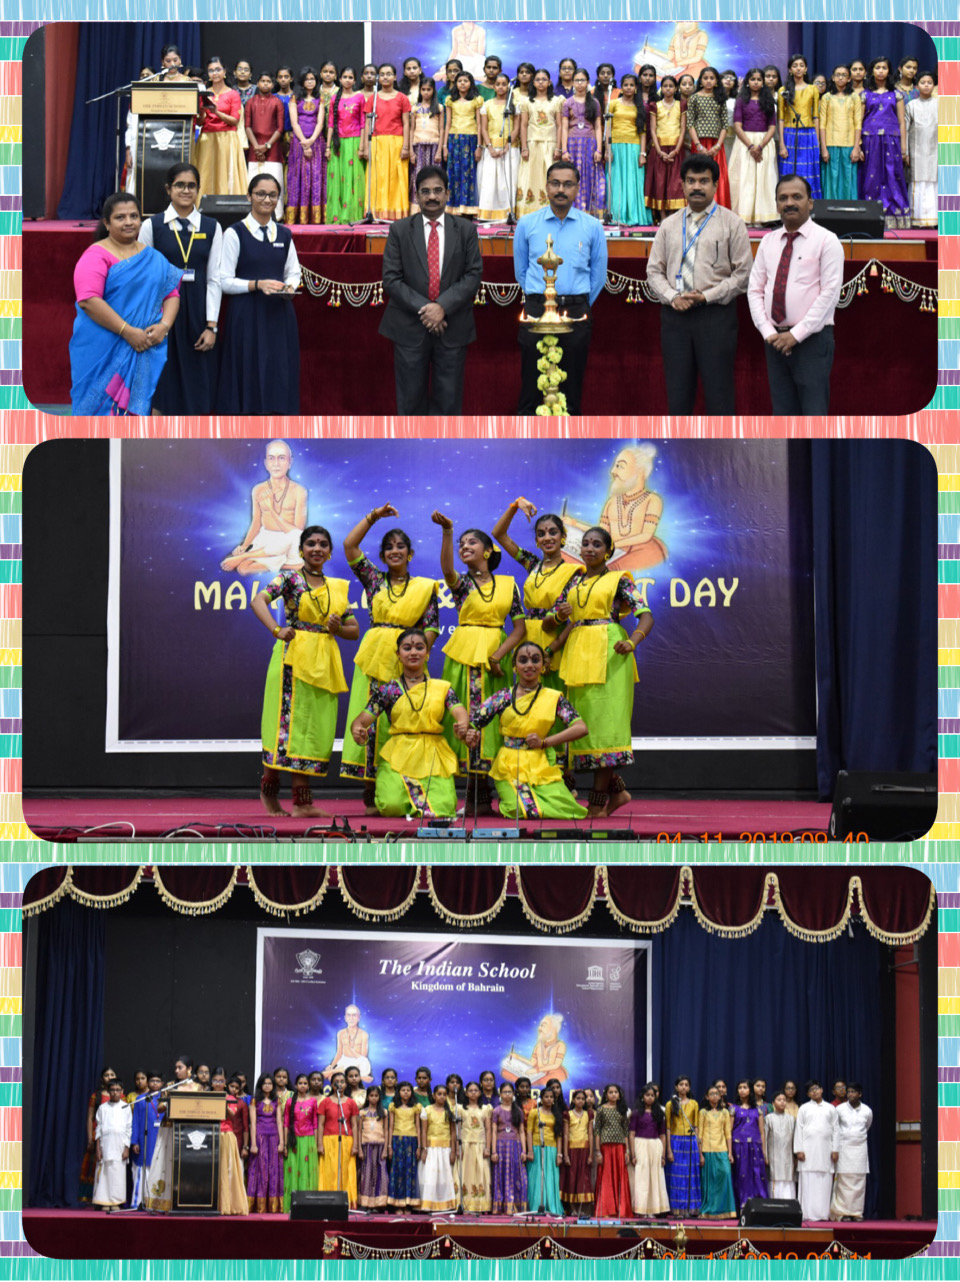 The Indian School Celebrates Malayalam Day